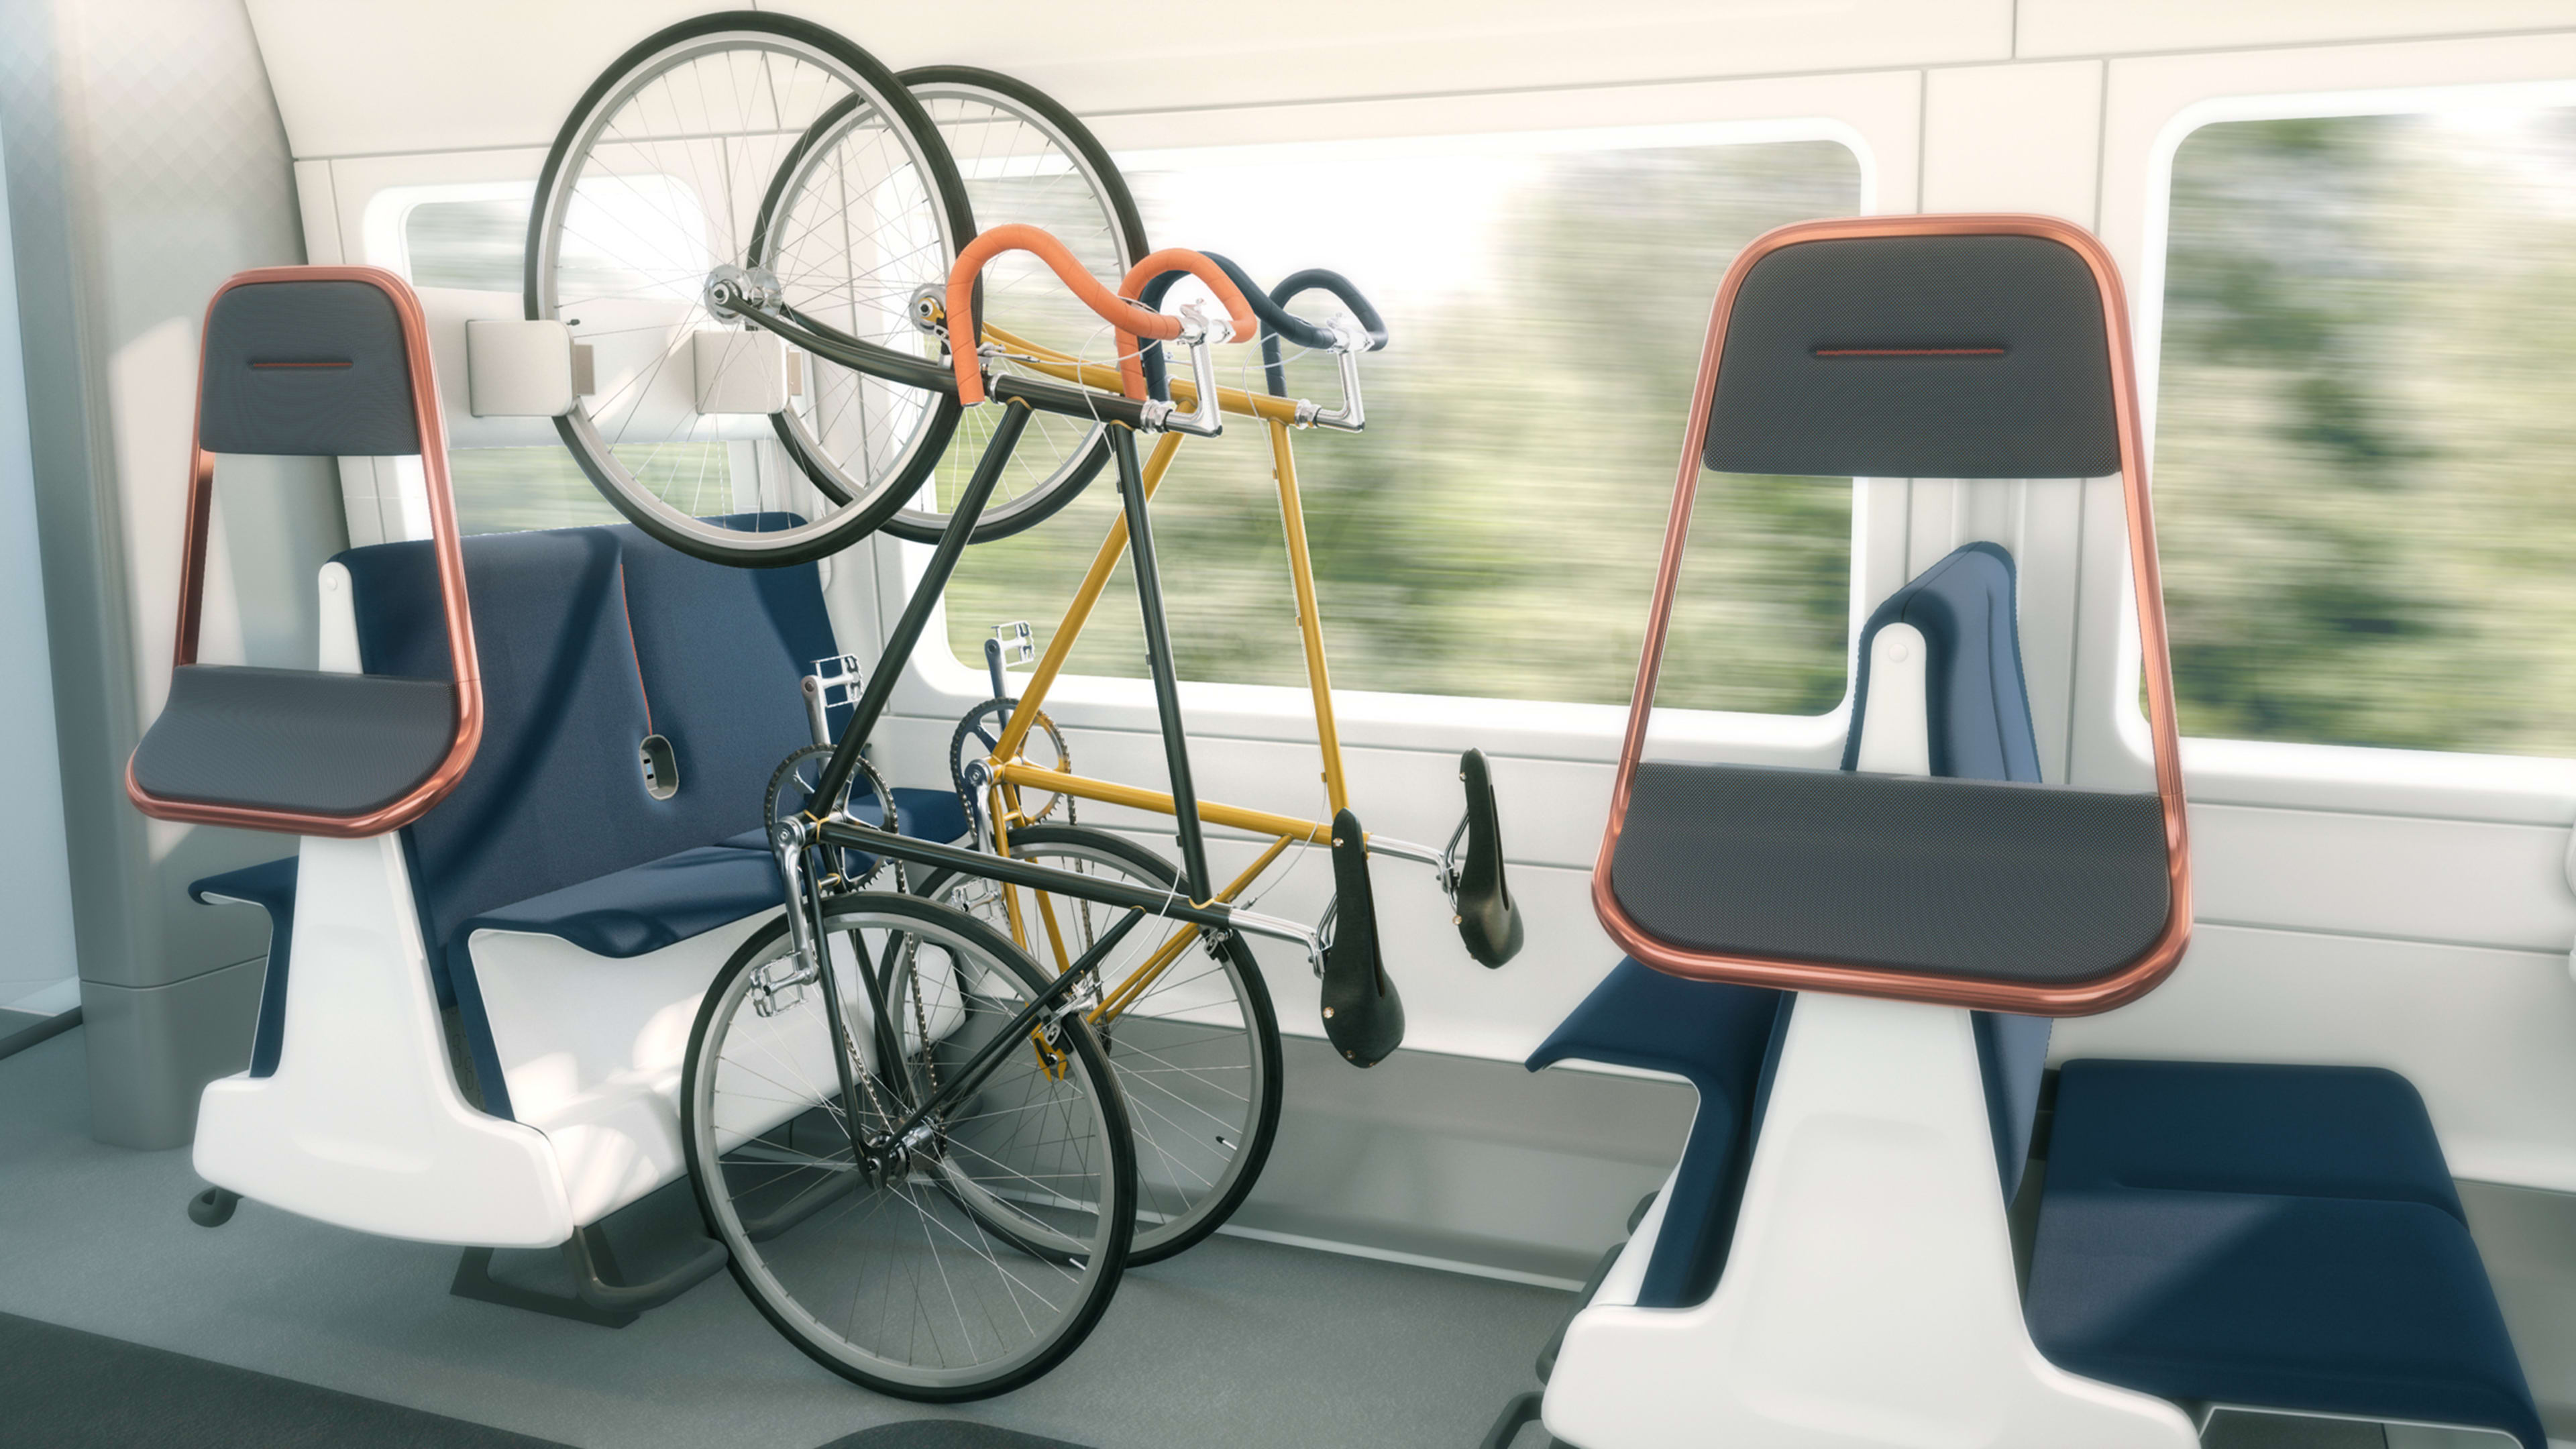 How social distancing could make public transportation more bike-friendly